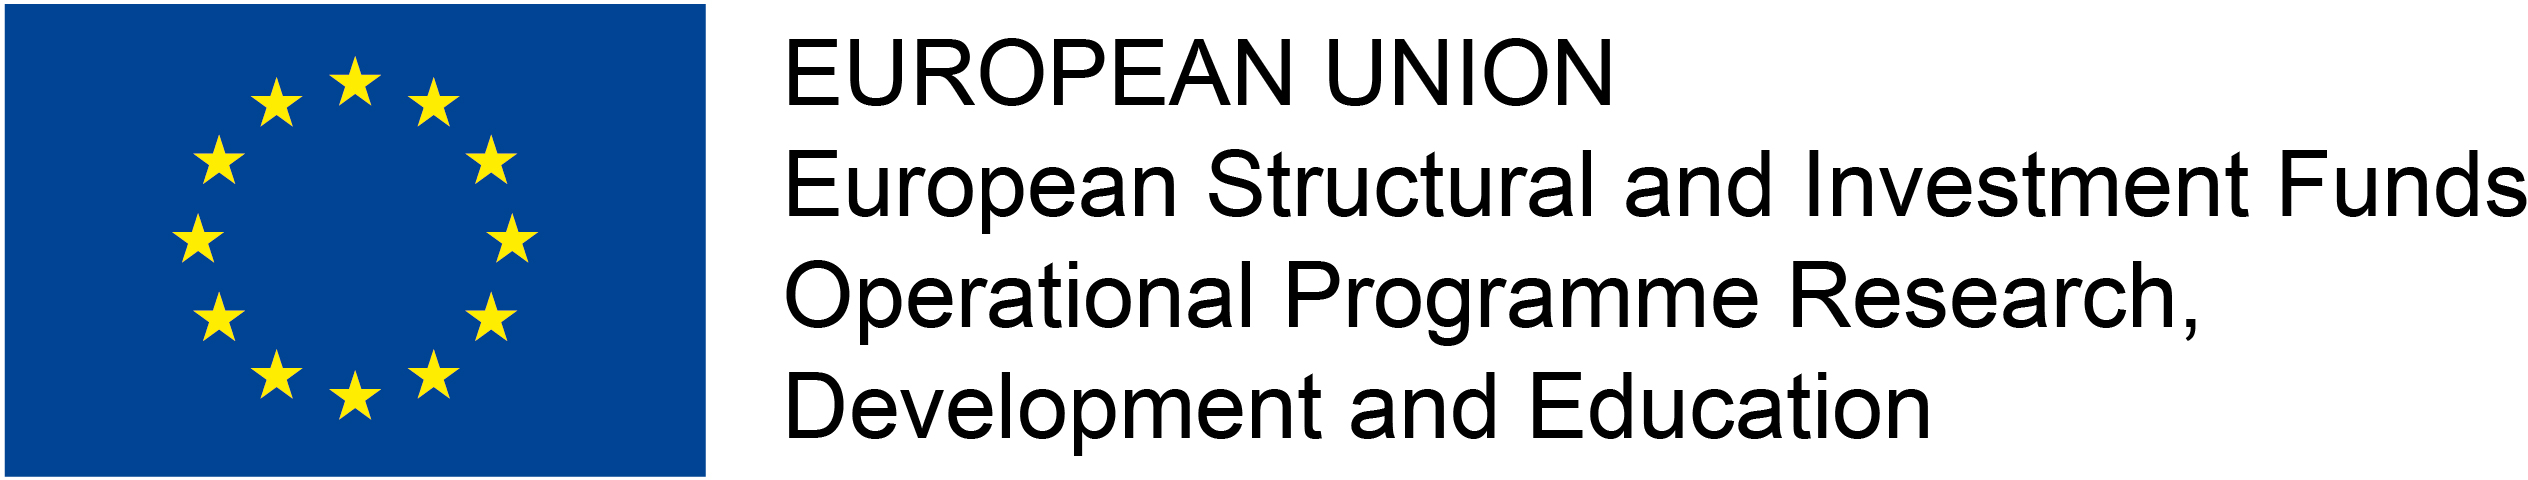 EU - Operational Programme Research, Development and Education